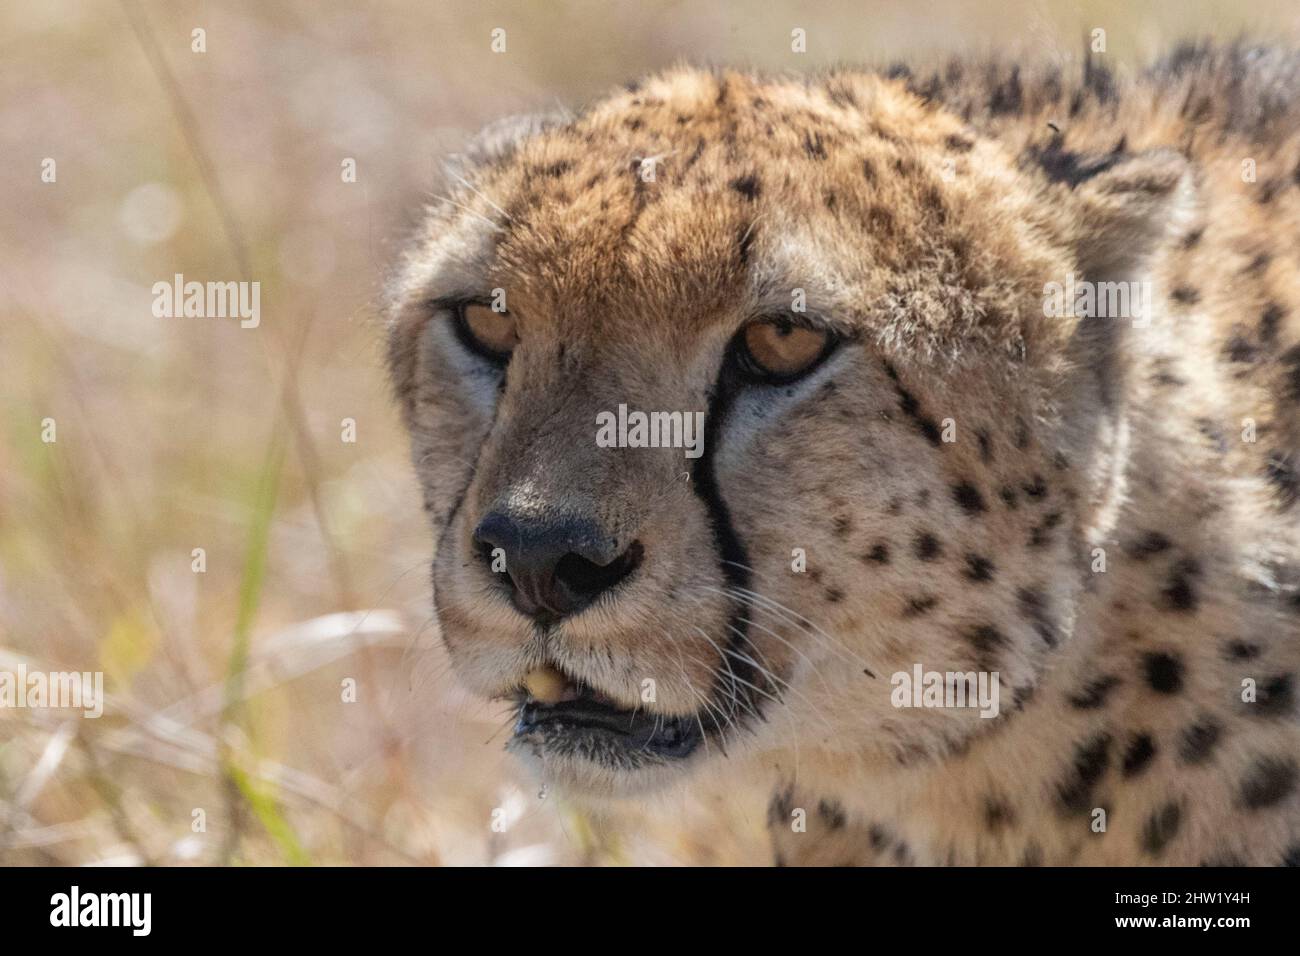 Kenya, Masai Mara National Reserve, Parco Nazionale, Cheetah (Acinonyx jubatus), nella savana, solo un animale Foto Stock